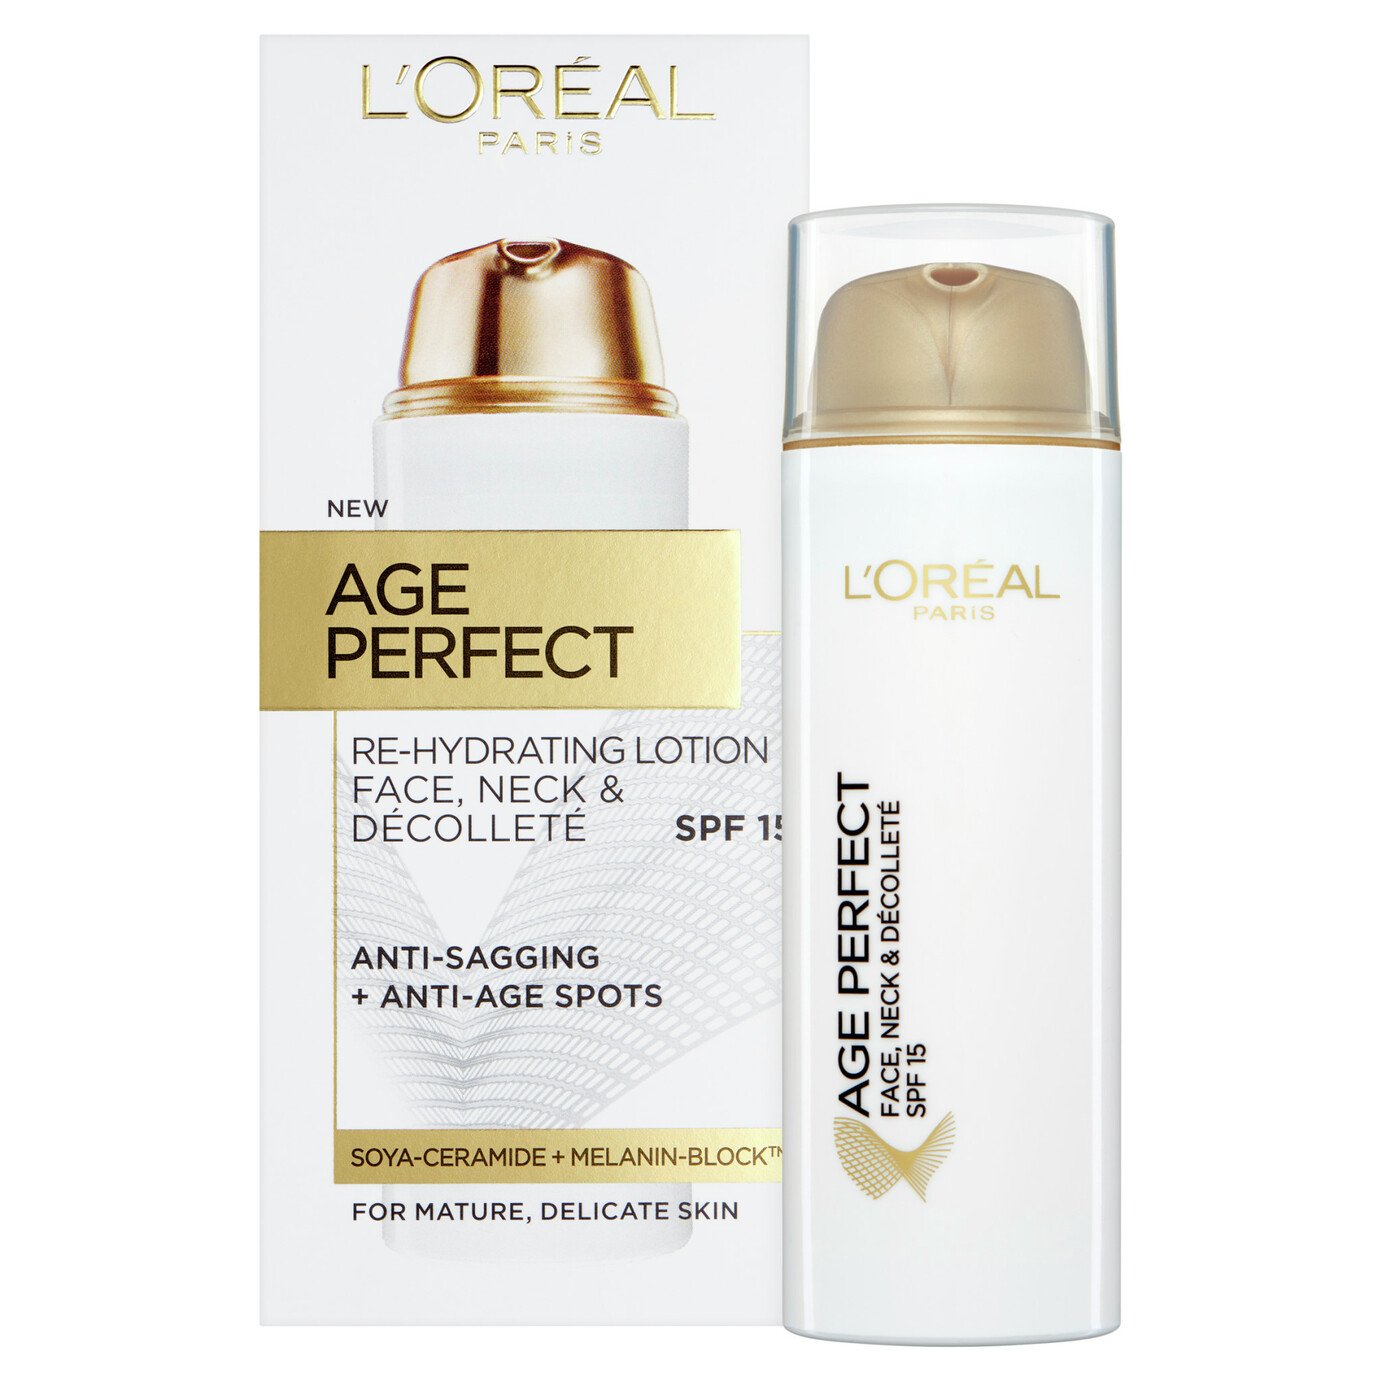 L'Oreal Paris Skin Age Perfect Face & Neck SPF15 Cream -50ml